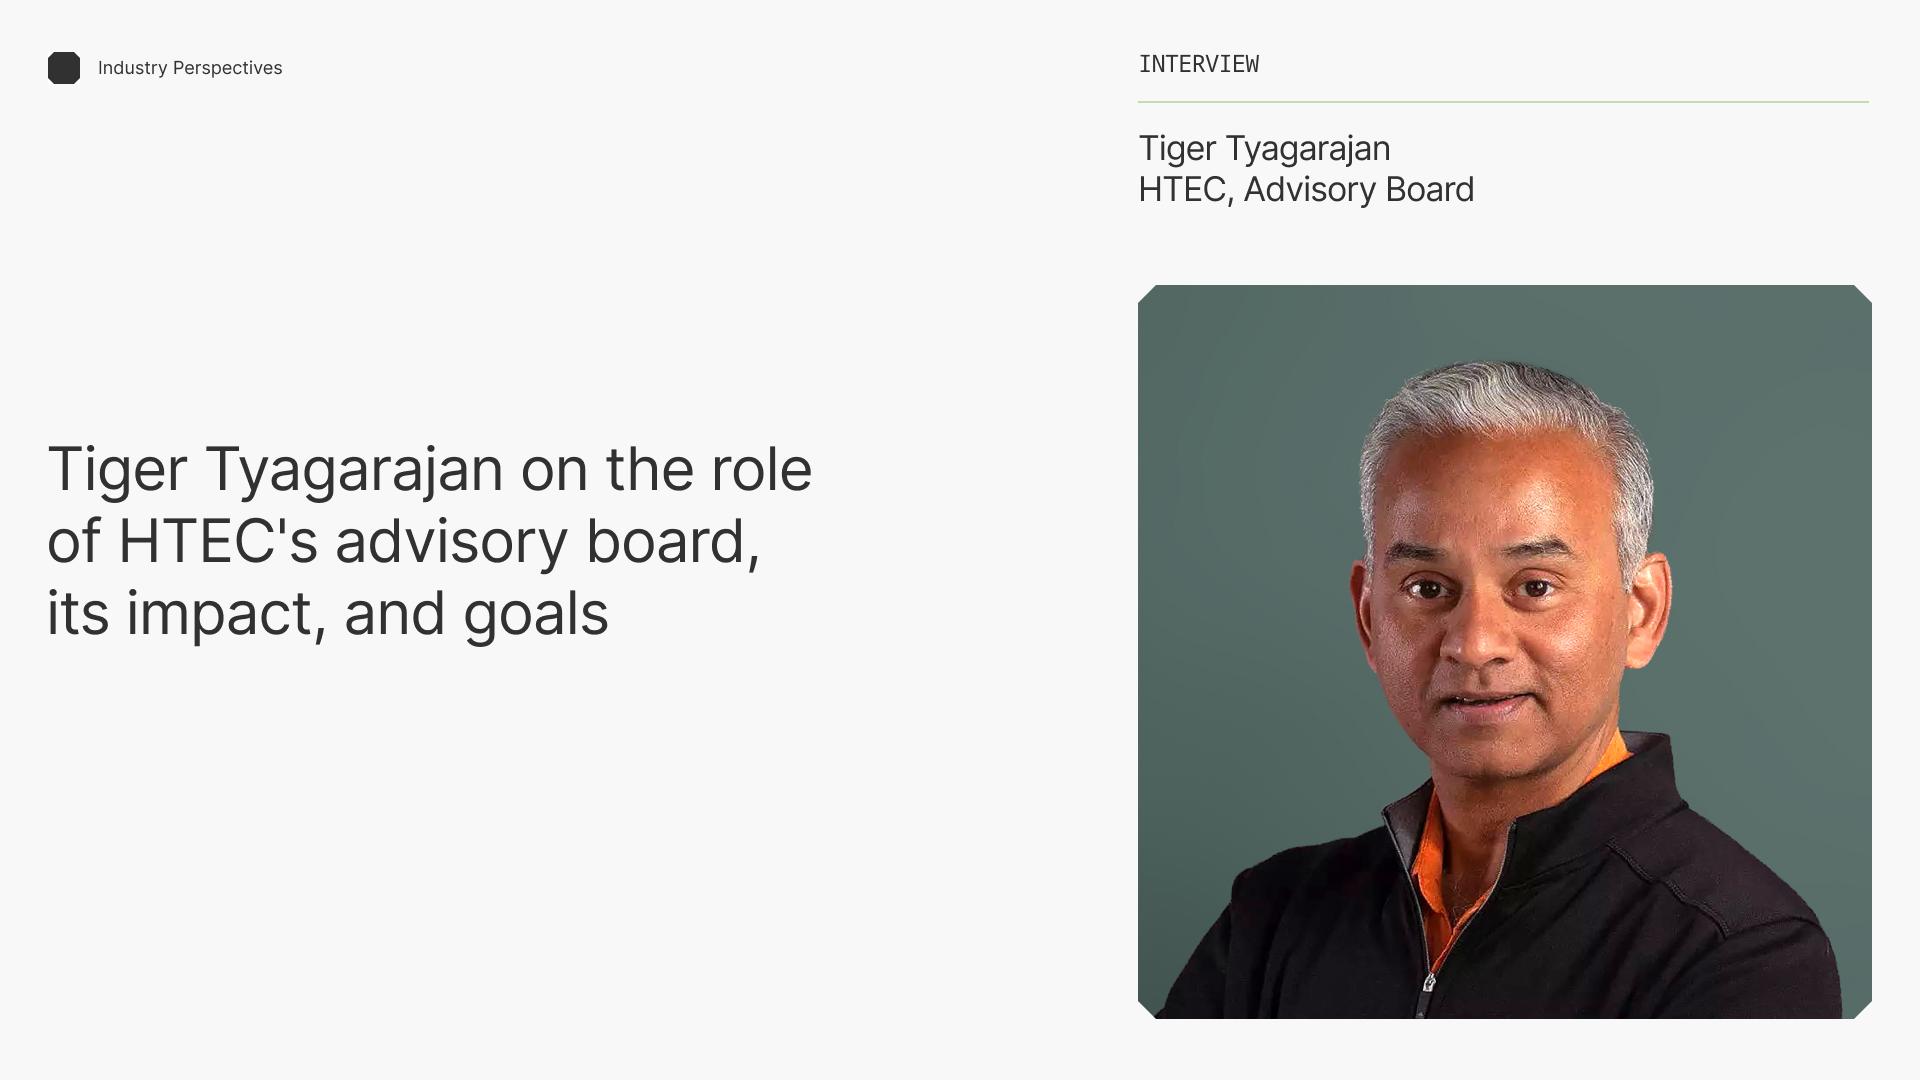 HTEC advisory board member Tiger Tyagarajan on catalyzing transformation in the tech enterprise space